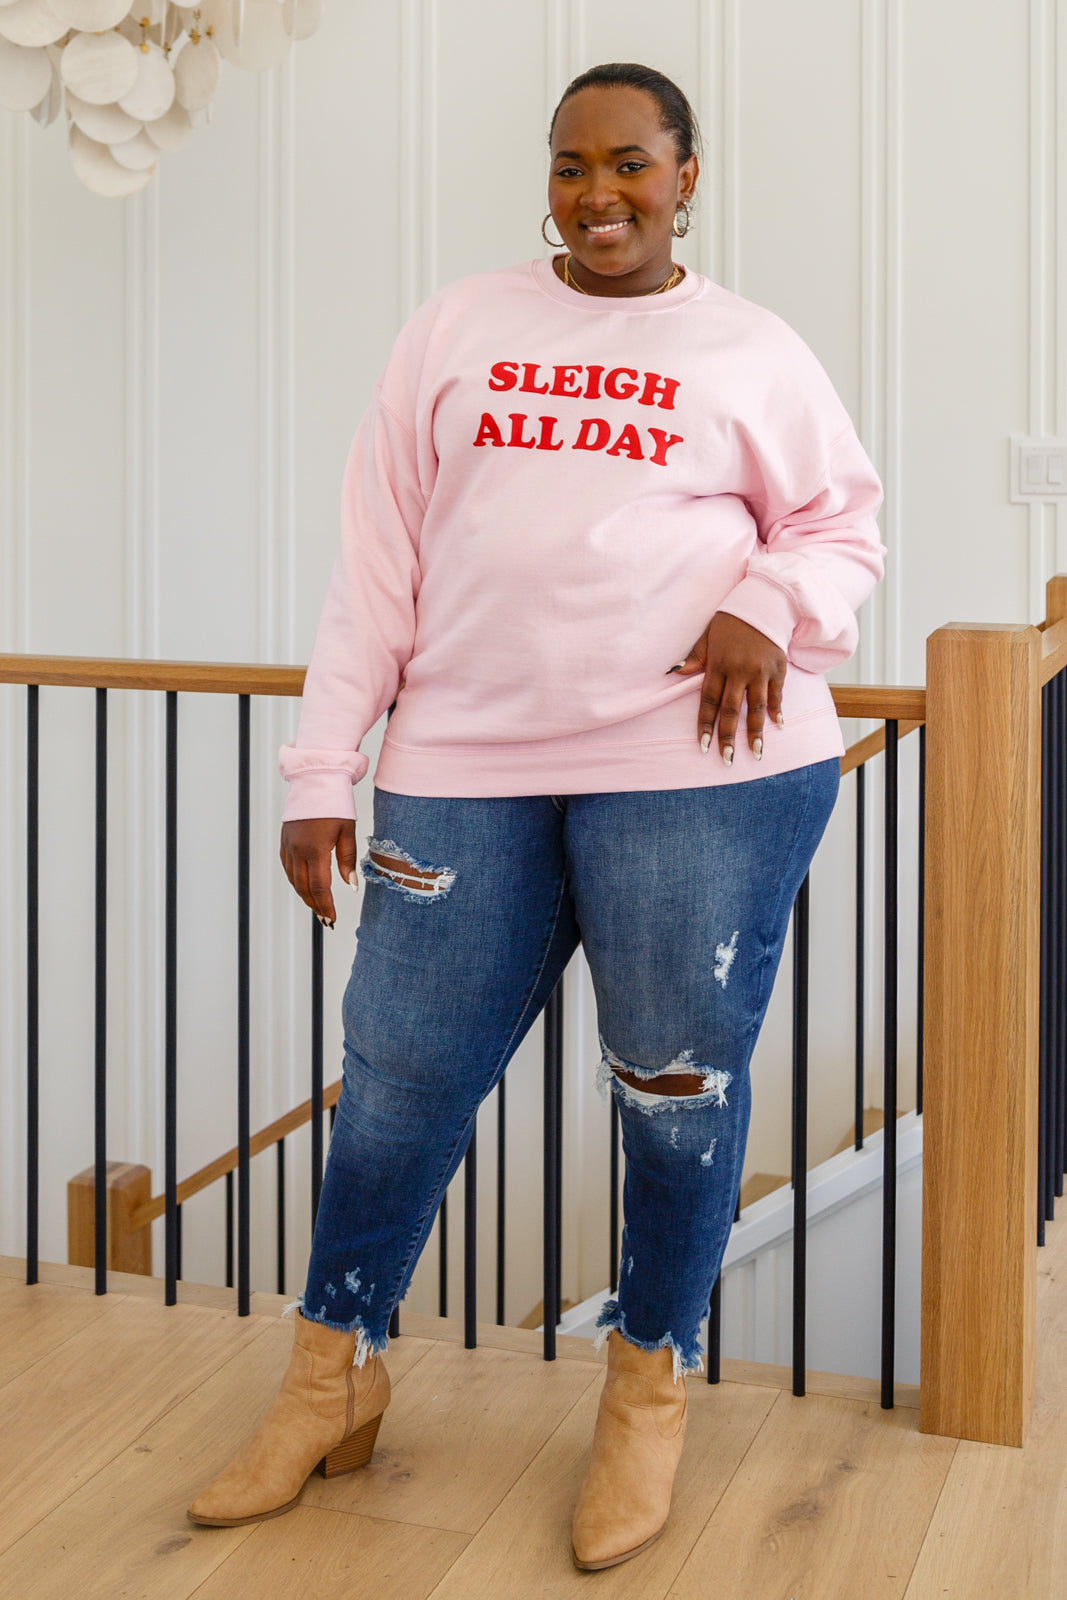 Sleigh All Day Sweatshirt In Pink - 11/15/2022